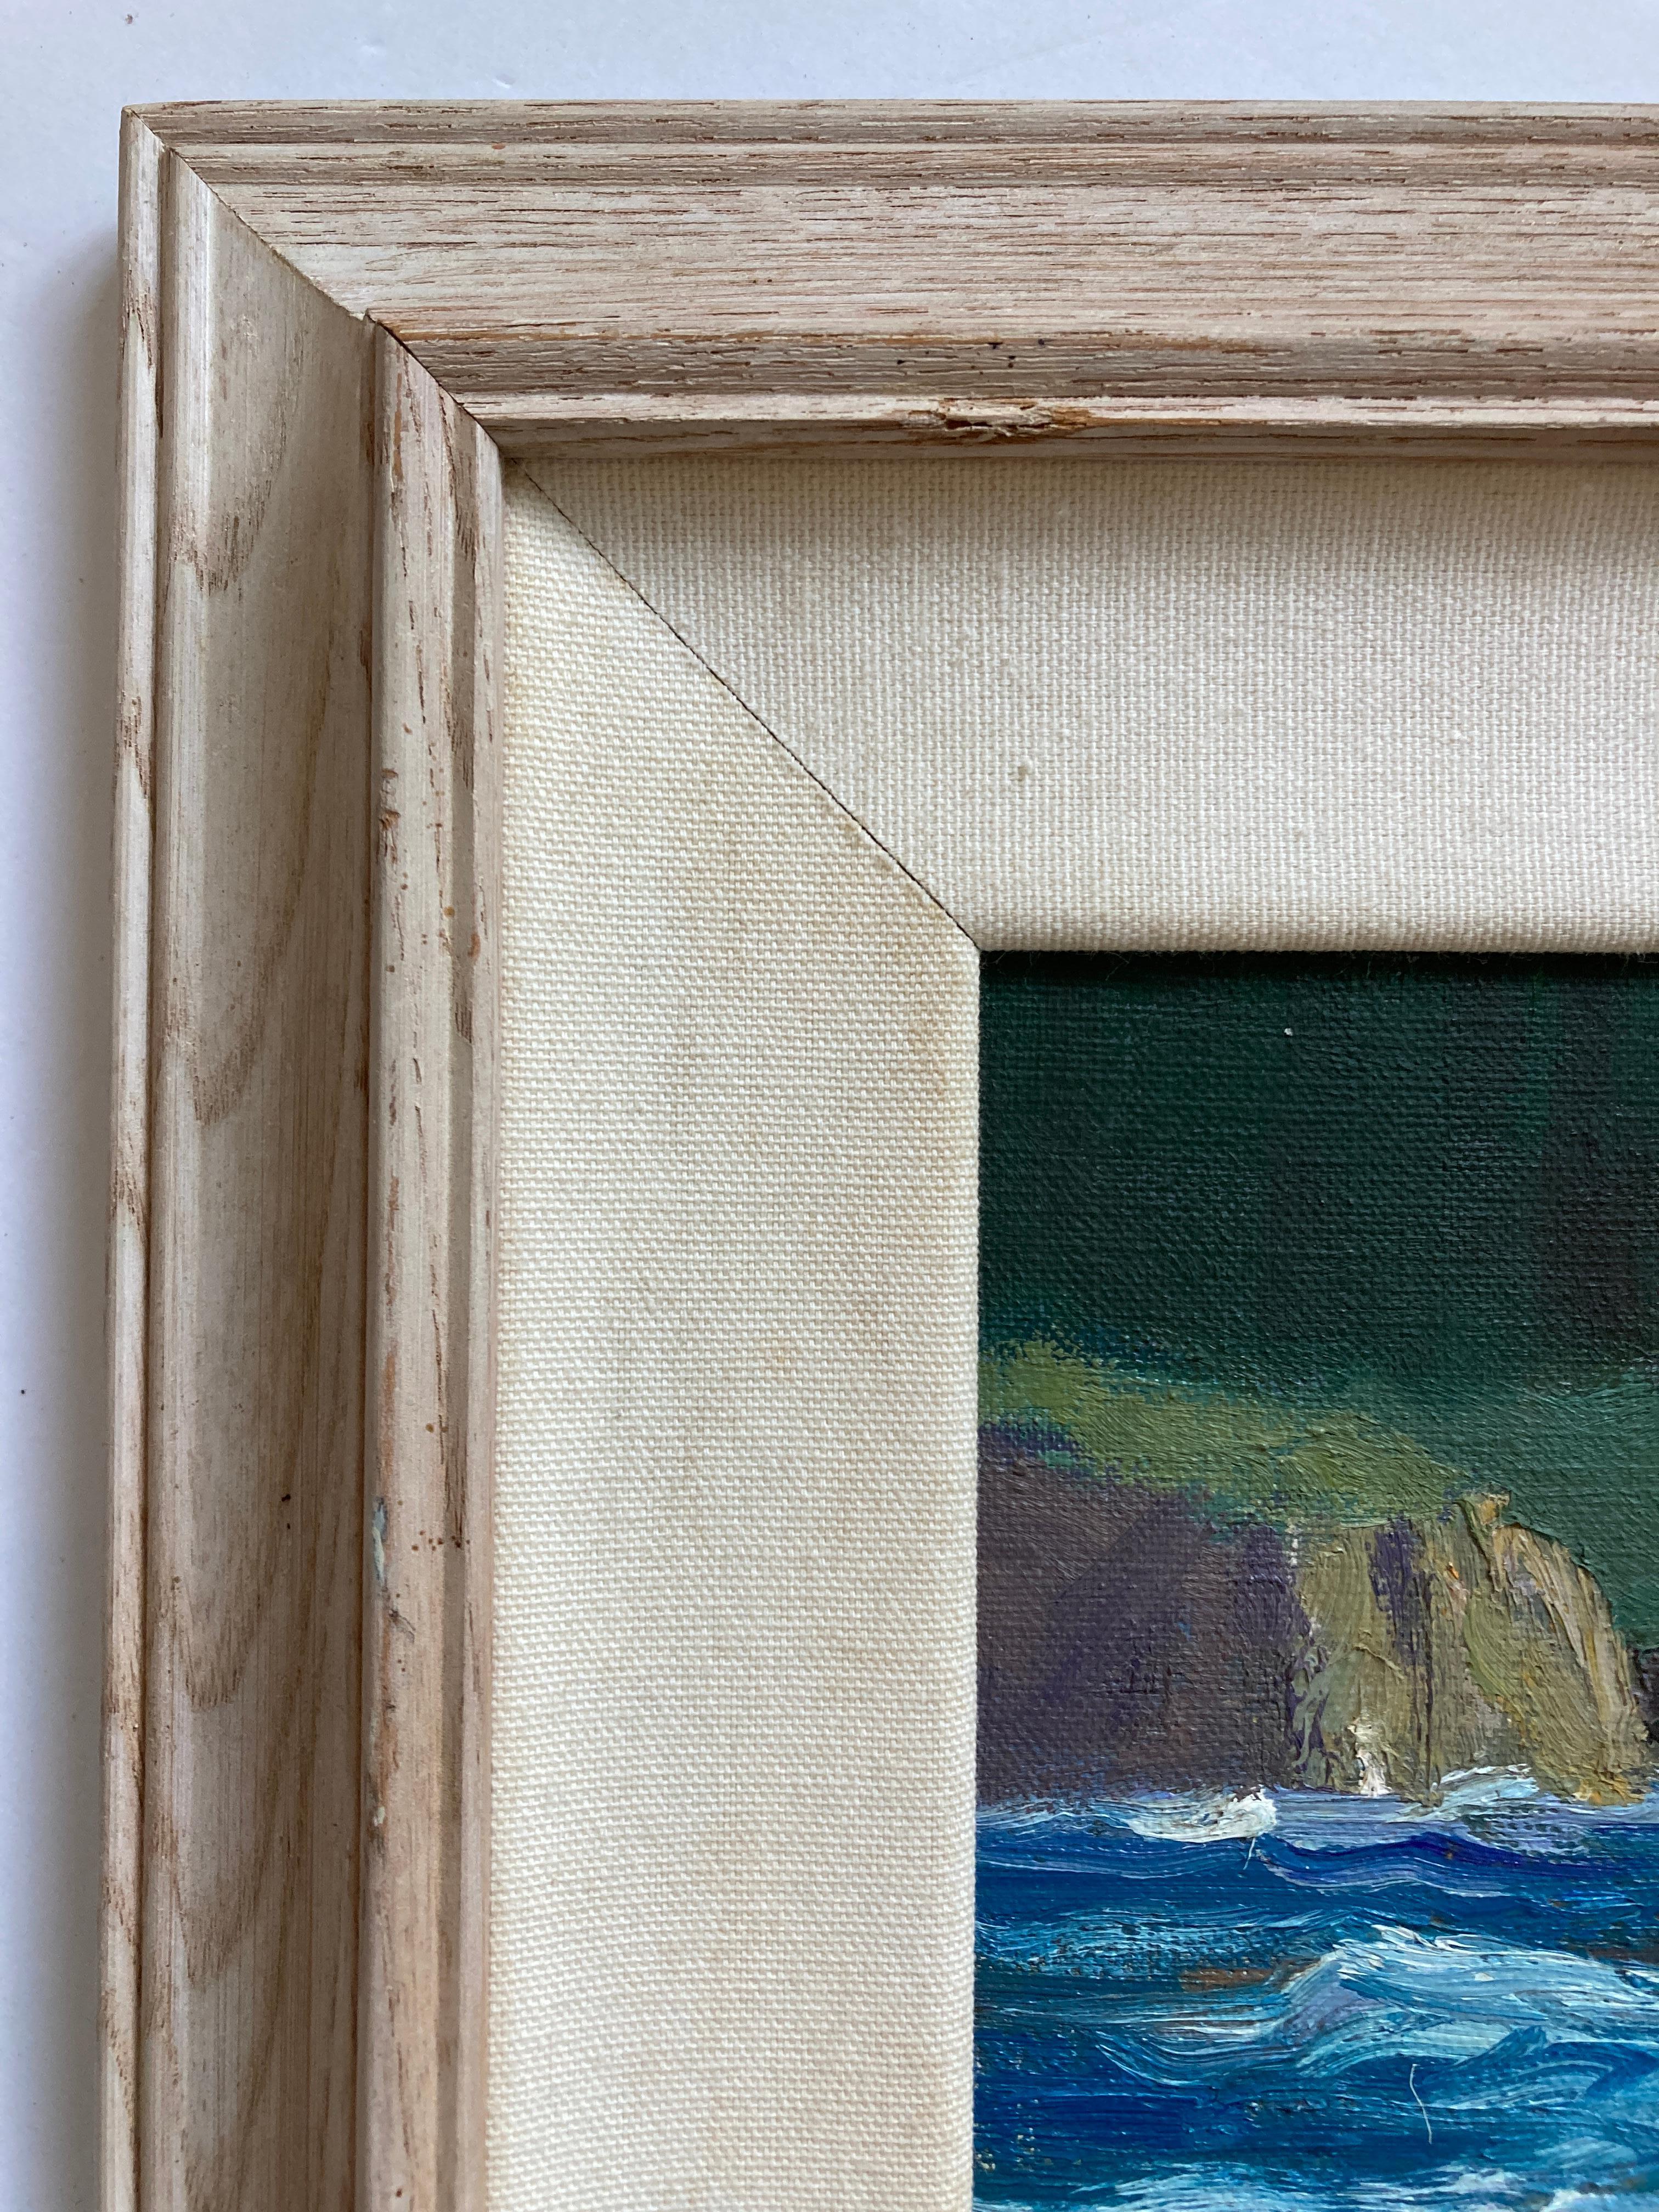 Edward Glafke 'Pebble Beach Coast' Impressionist Seascape Painting For Sale 4